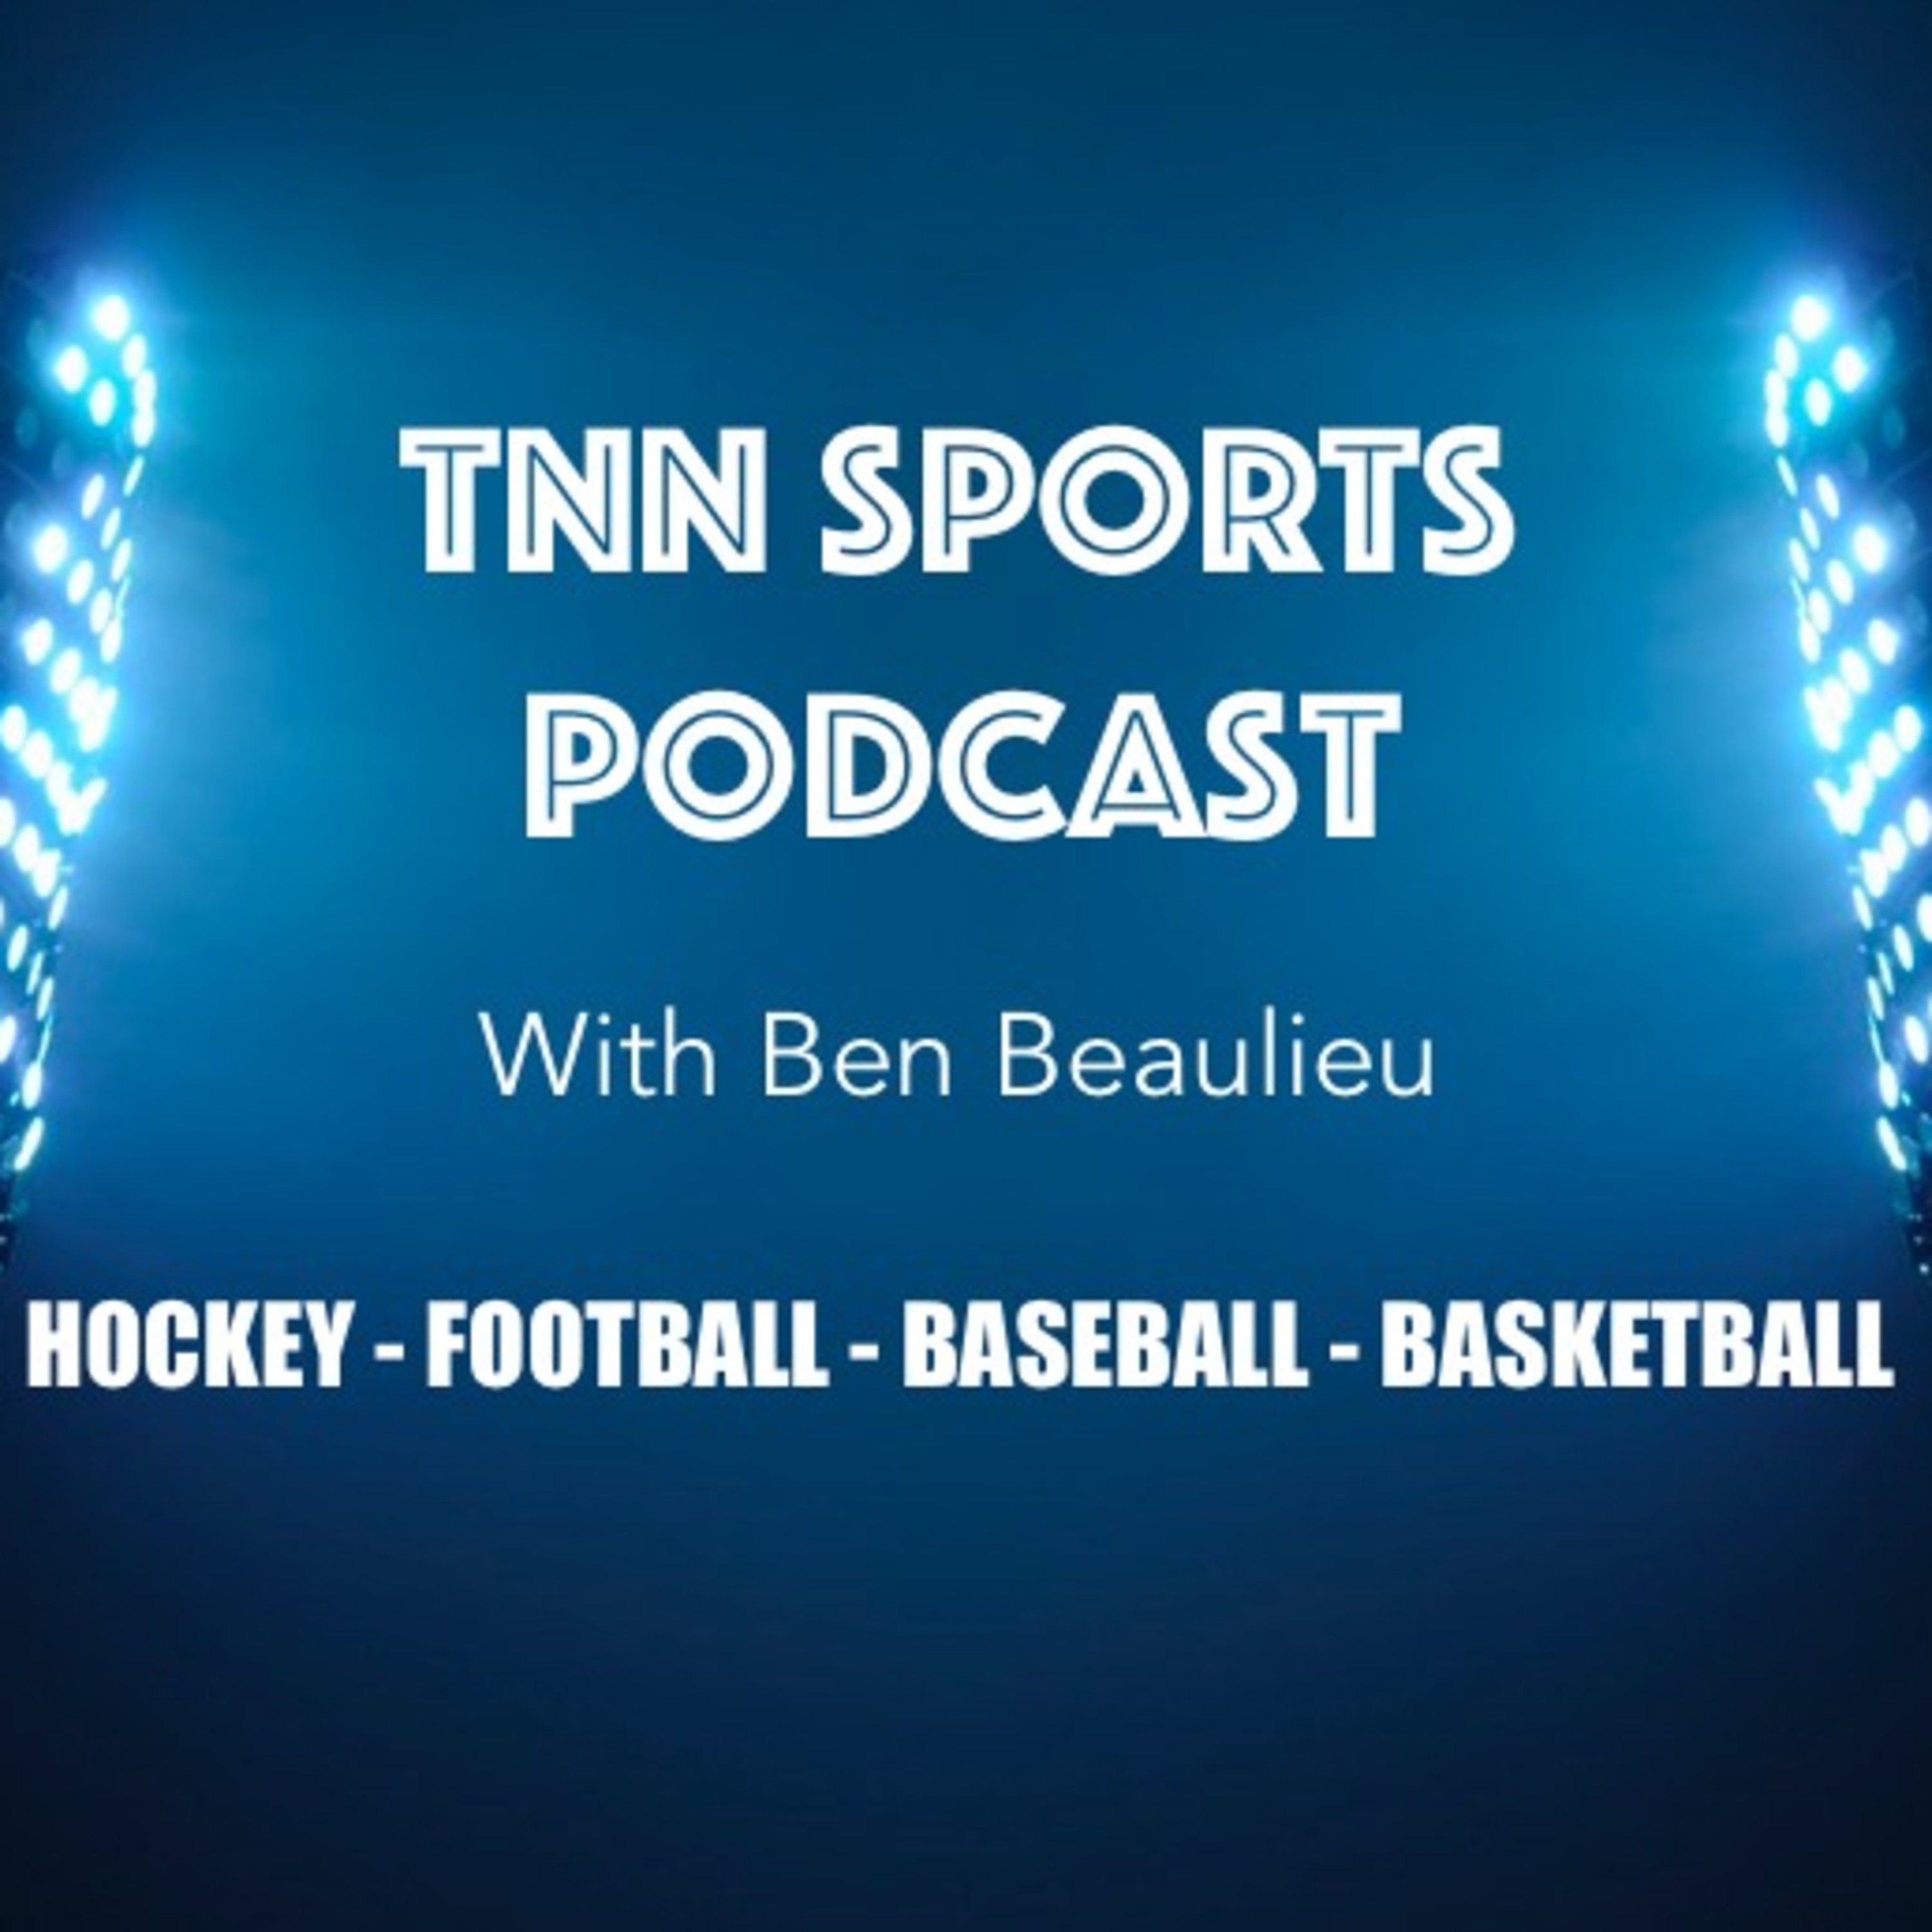 TNN Sports Podcast